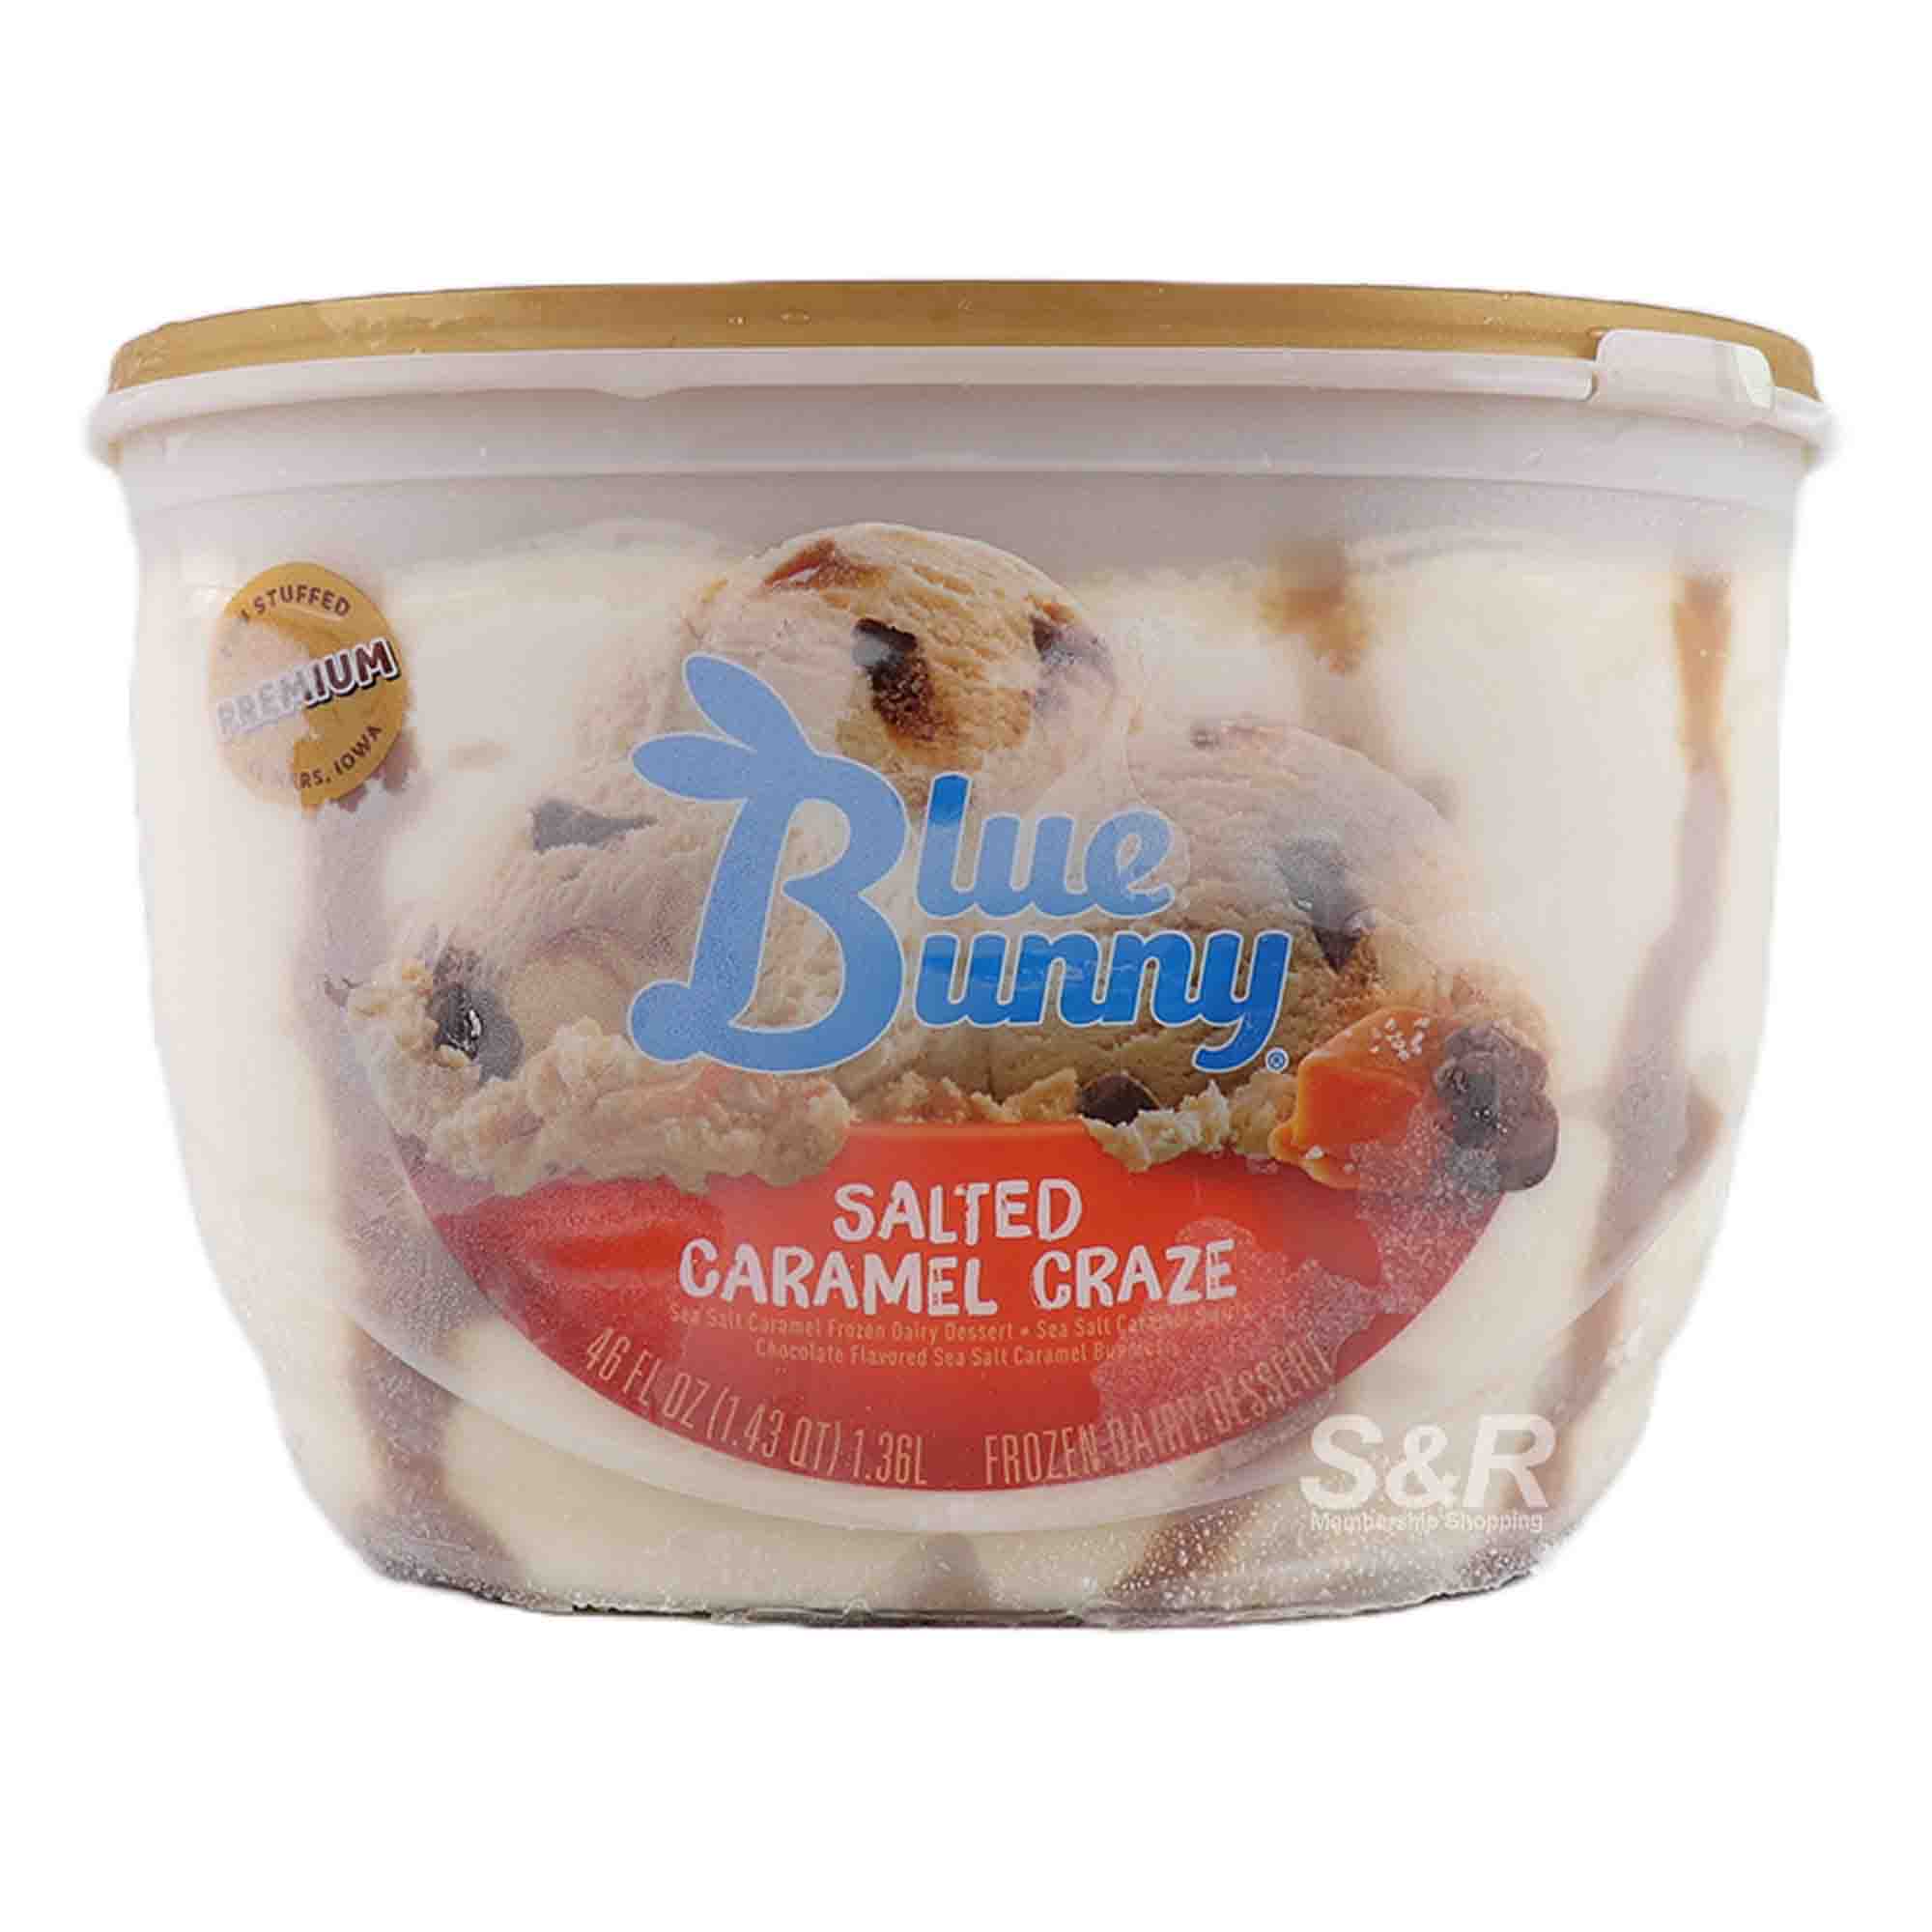 Blue Bunny Salted Caramel Craze Frozen Dairy Dessert 1.36L